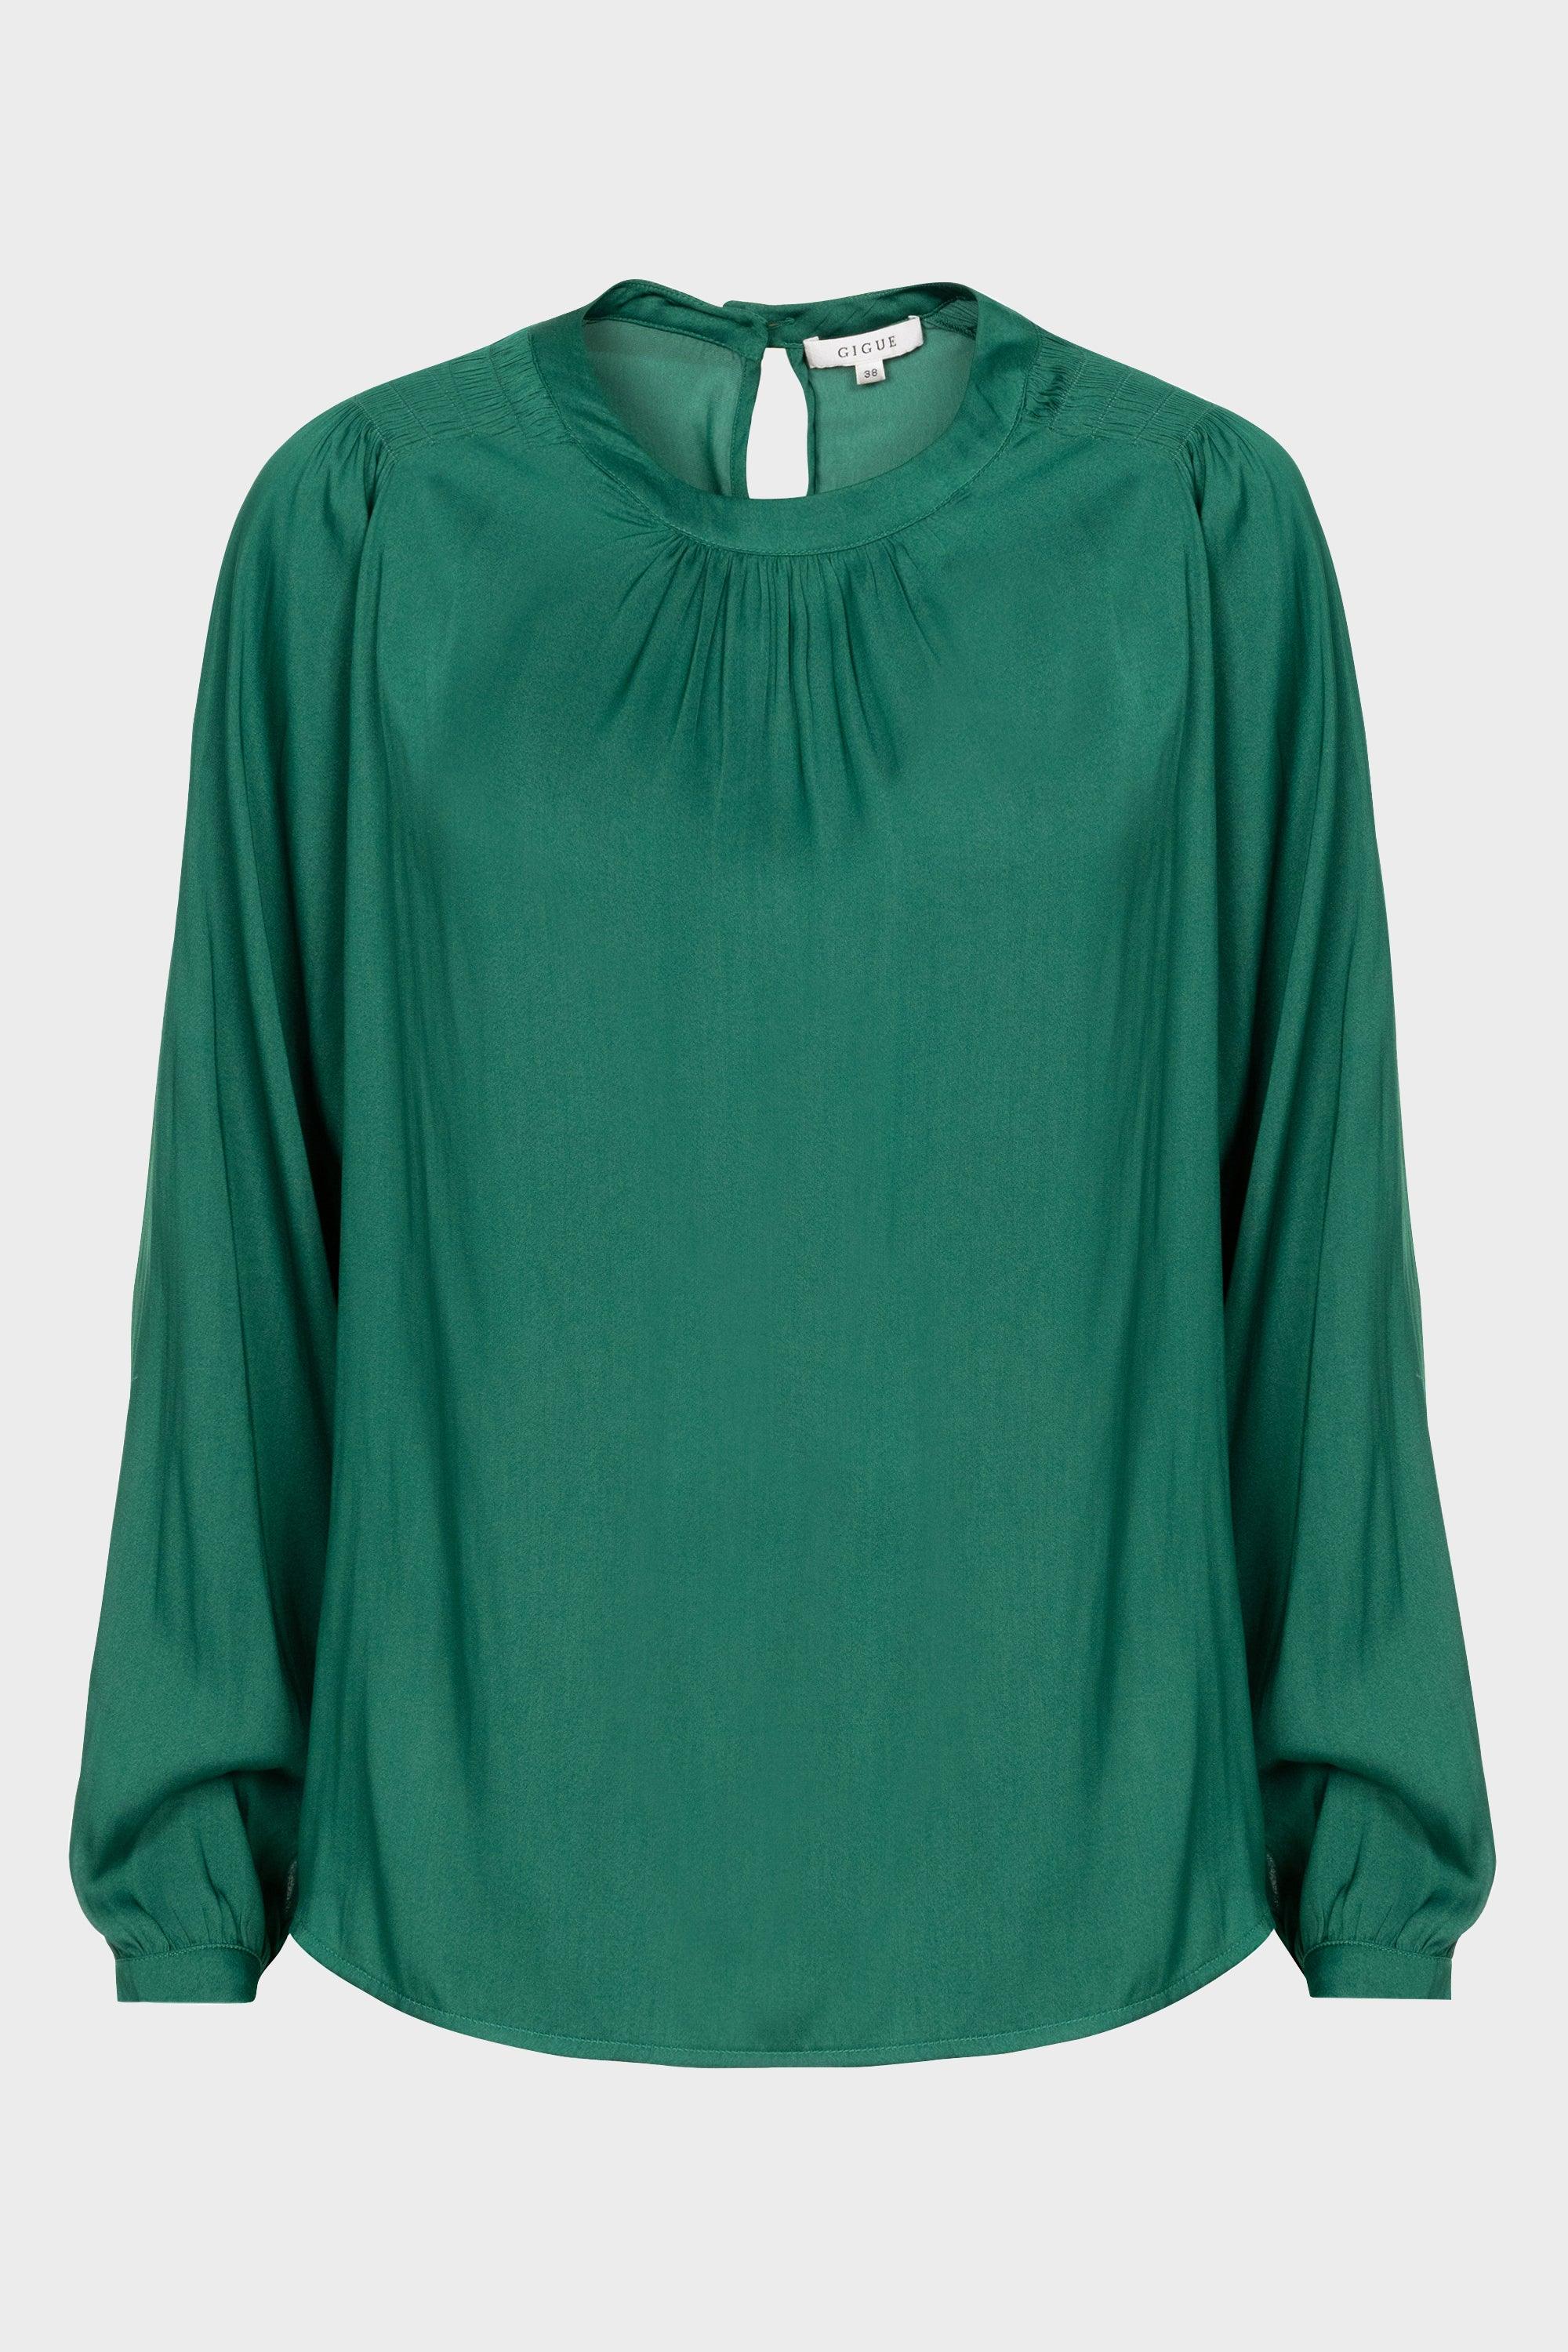 Bloes Groen Gigue ( Handy 720/2556 ) - Delaere Womenswear